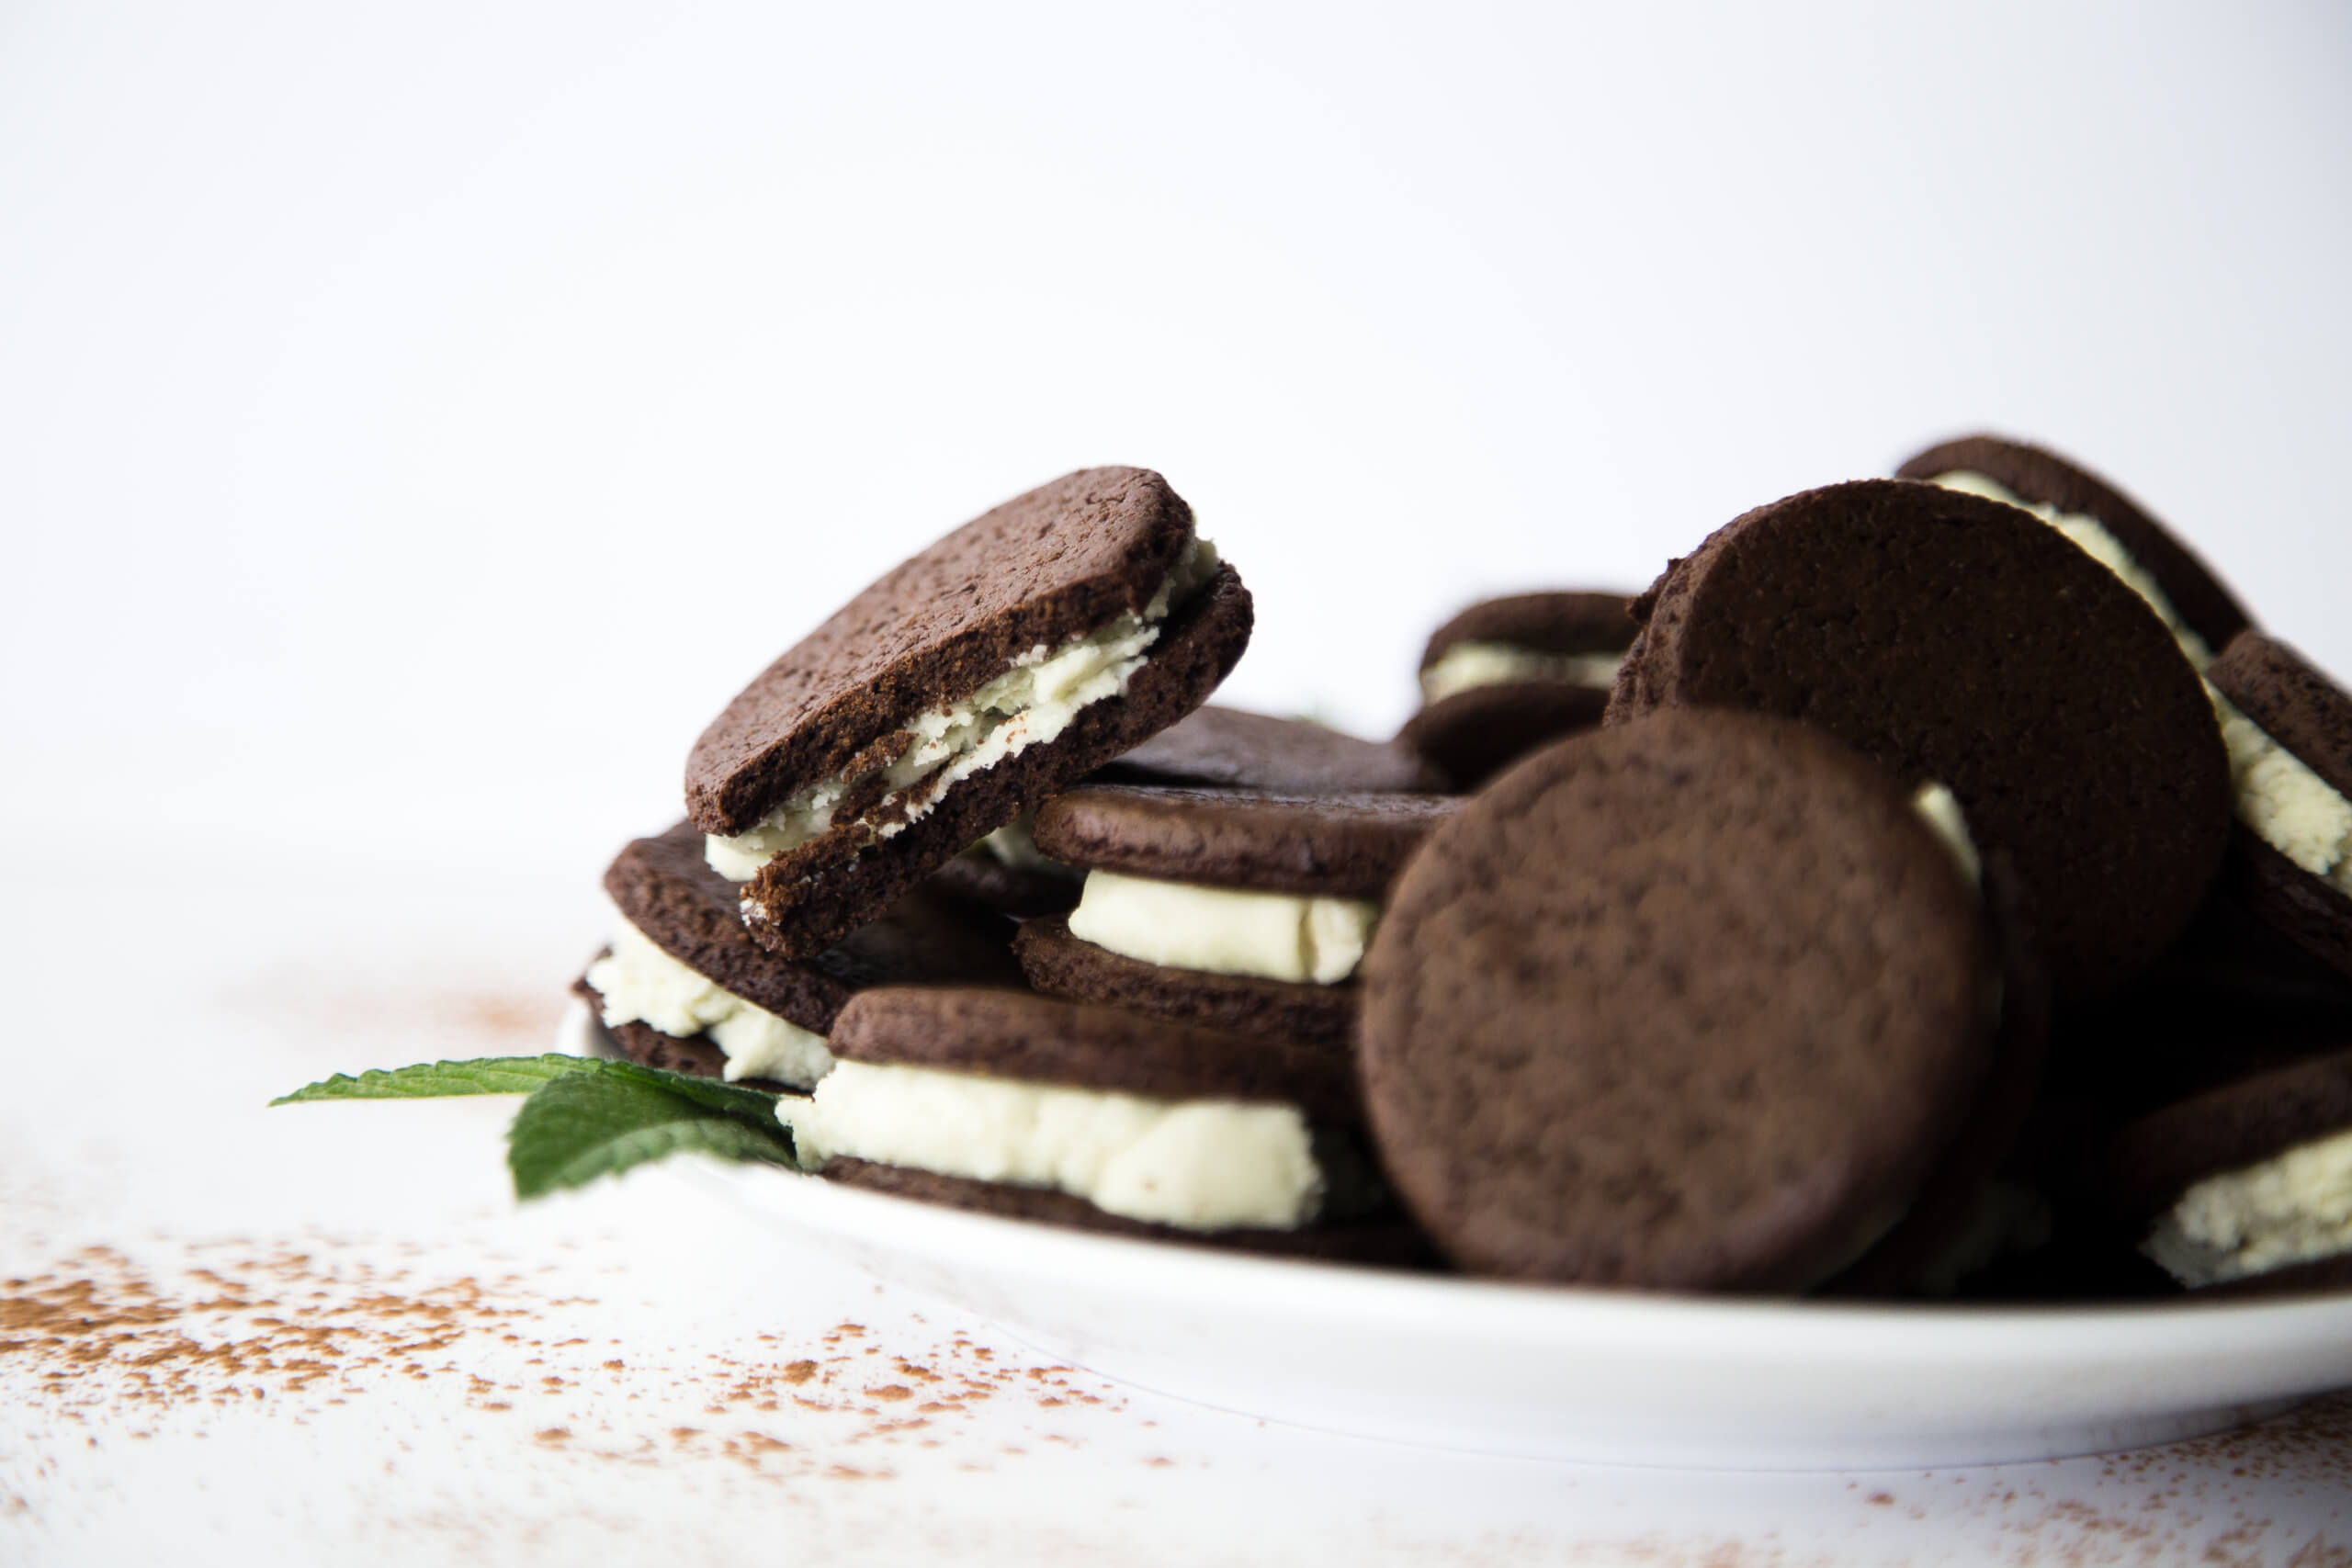 Holiday Recipe Challenge: Chocolate Mint "Oreo" Cookies